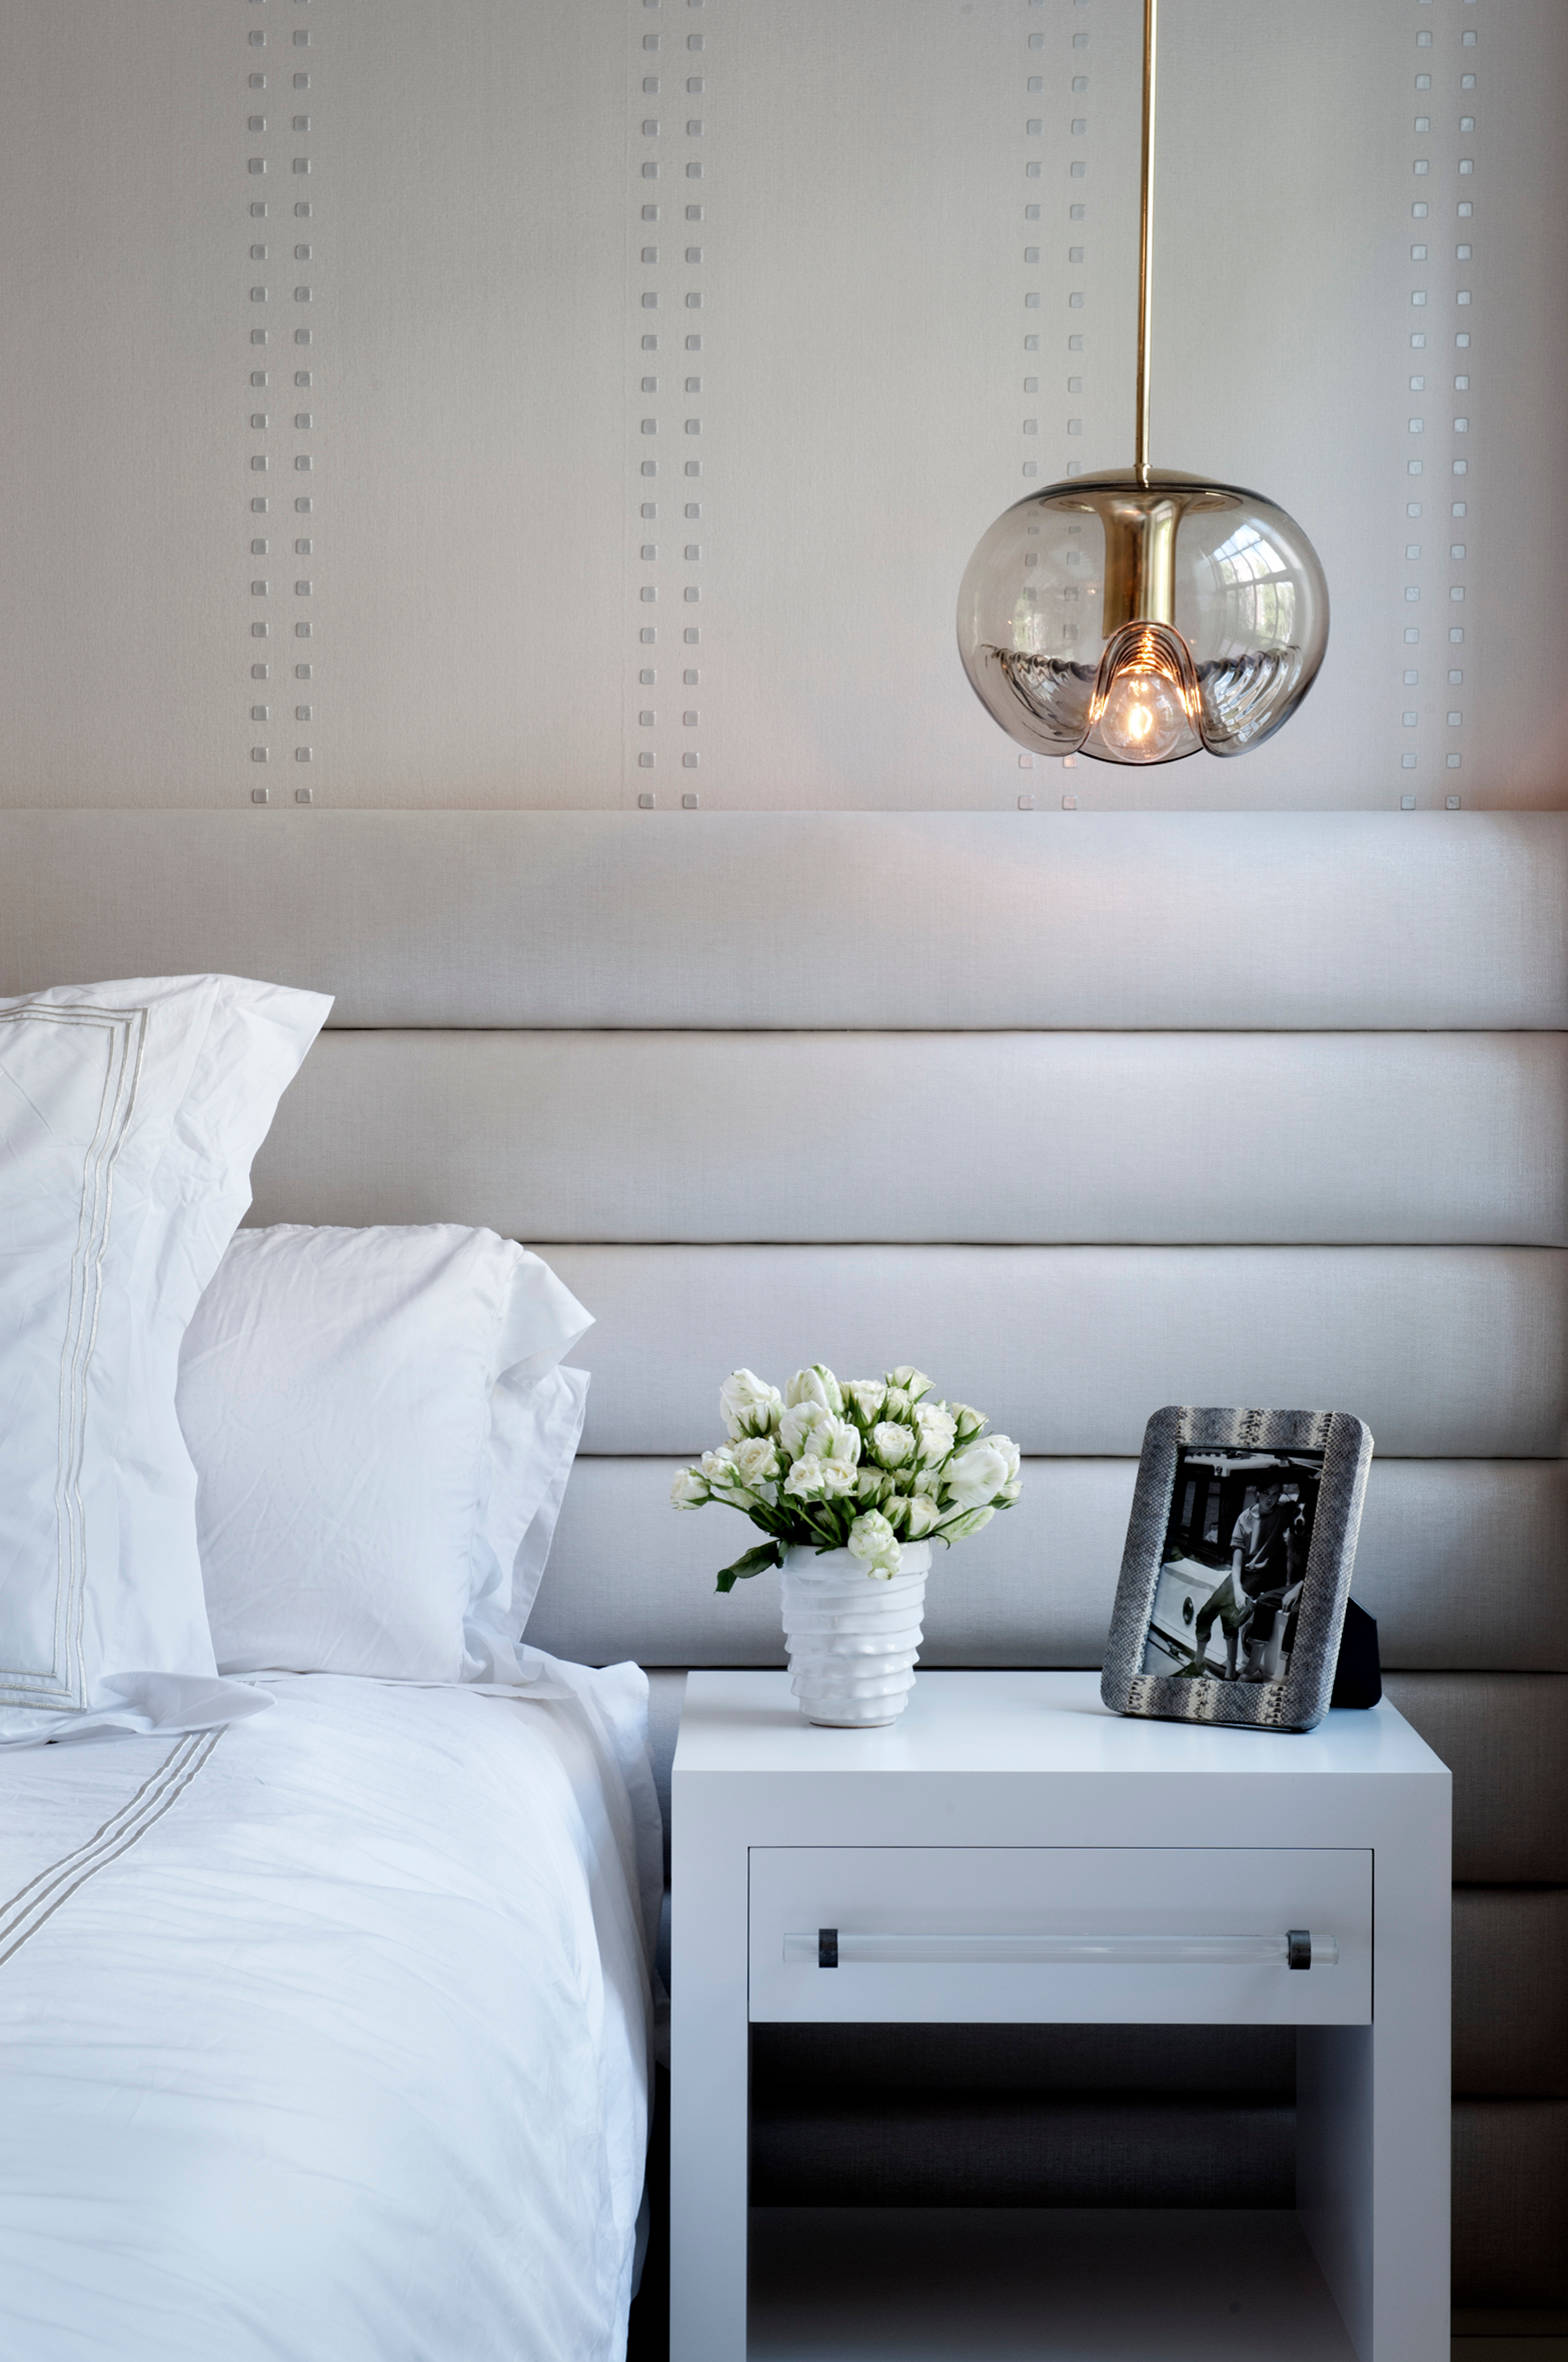 14 Ideas For Bedside Pendant Lights, Hanging Bedside Table Lamps